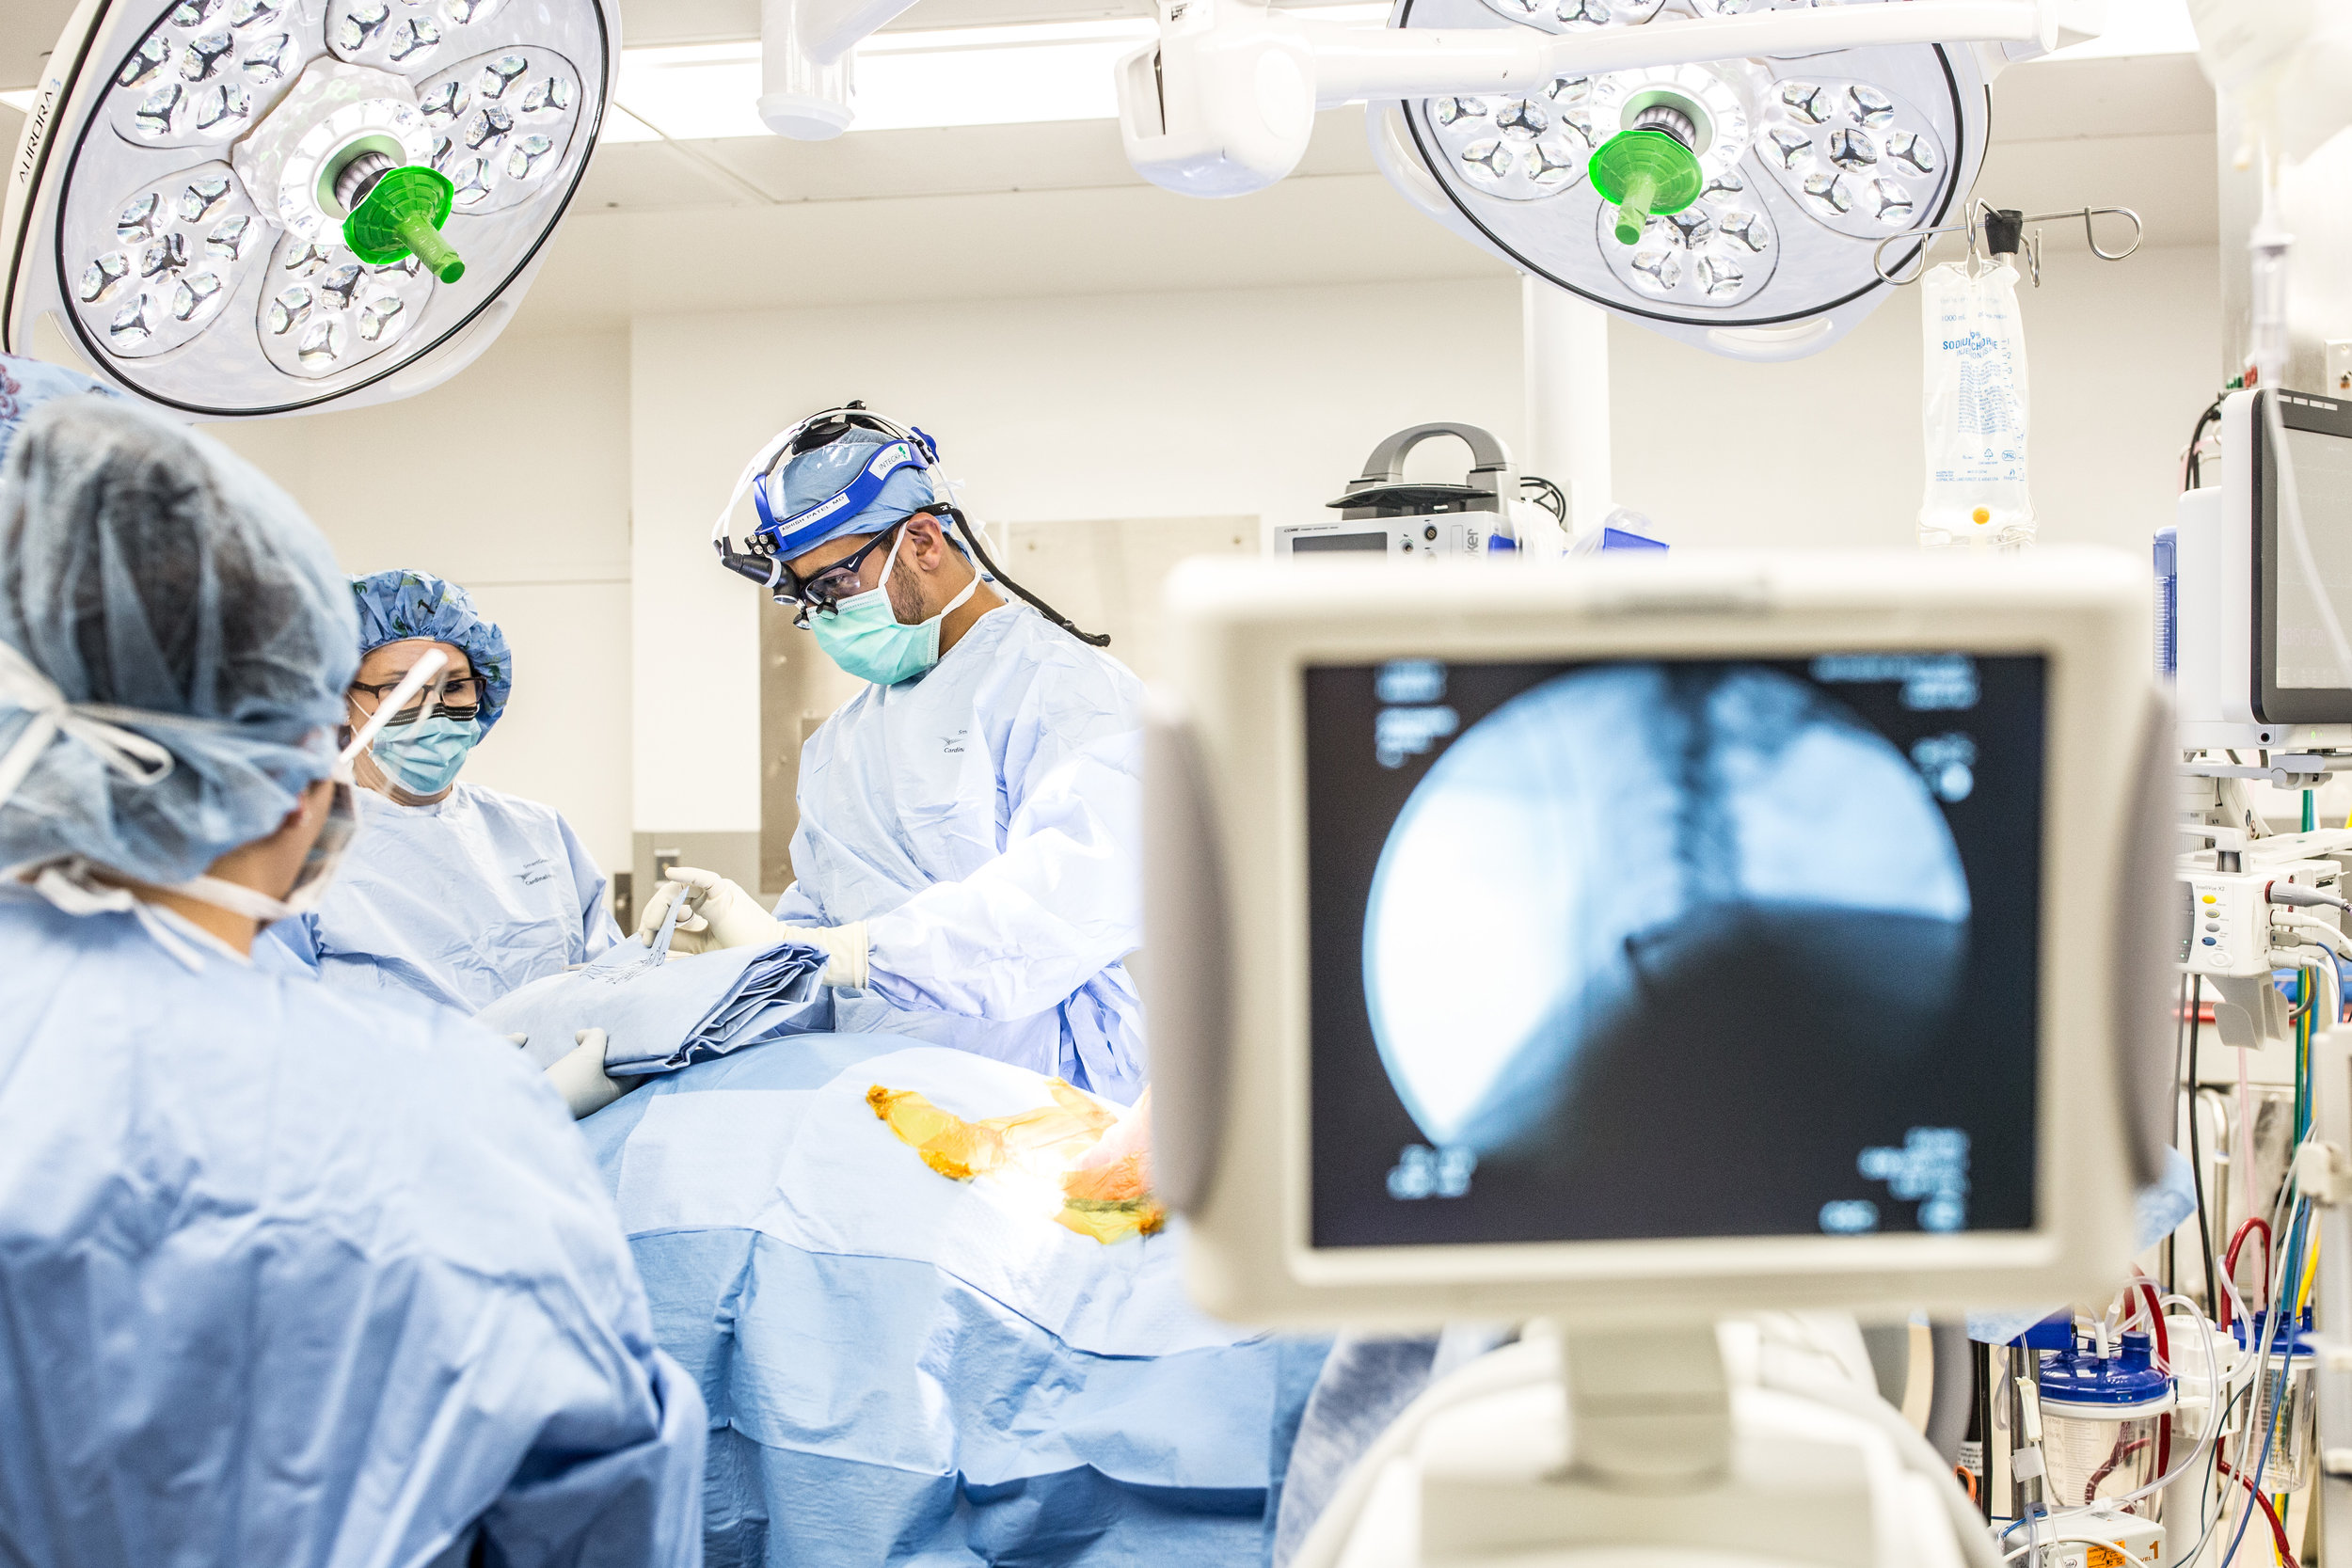 https://mdashishpatel.com/wp-content/uploads/2020/12/md-ashish-patel-in-operating-room-performing-minimally-invasive-spine-surgery.jpg